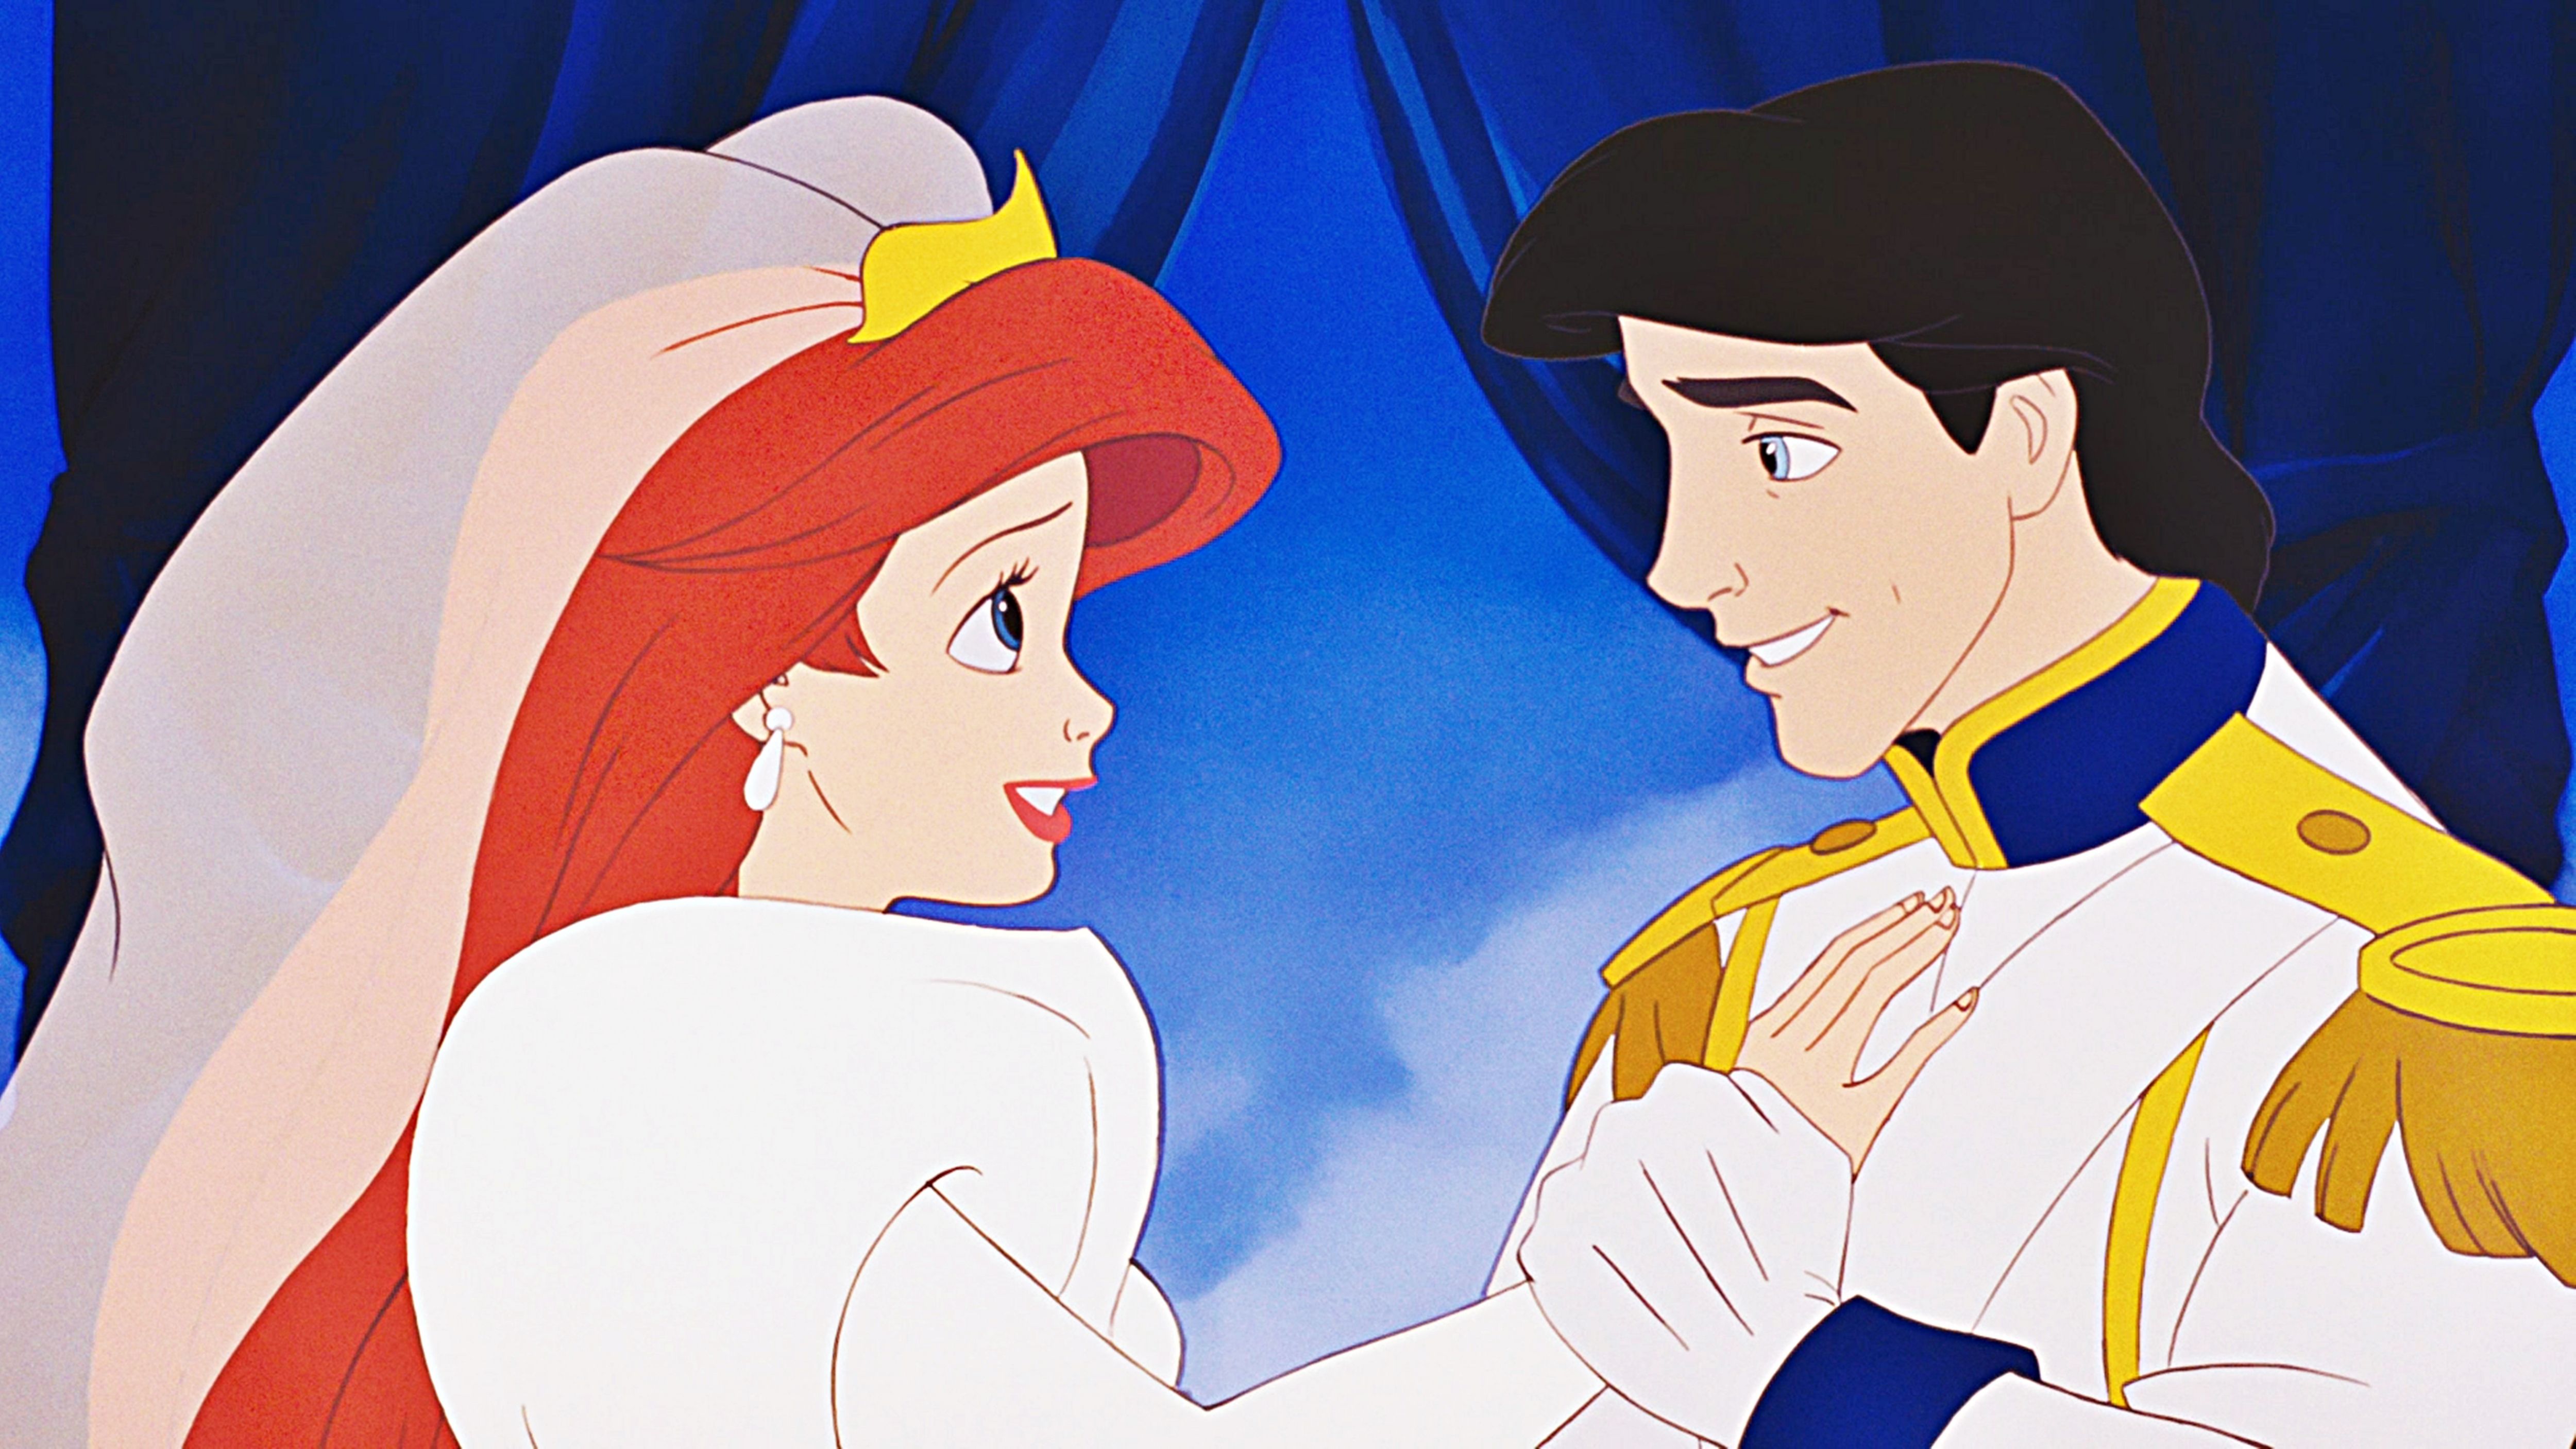 Princess Ariel And Prince Eric Wallpaper